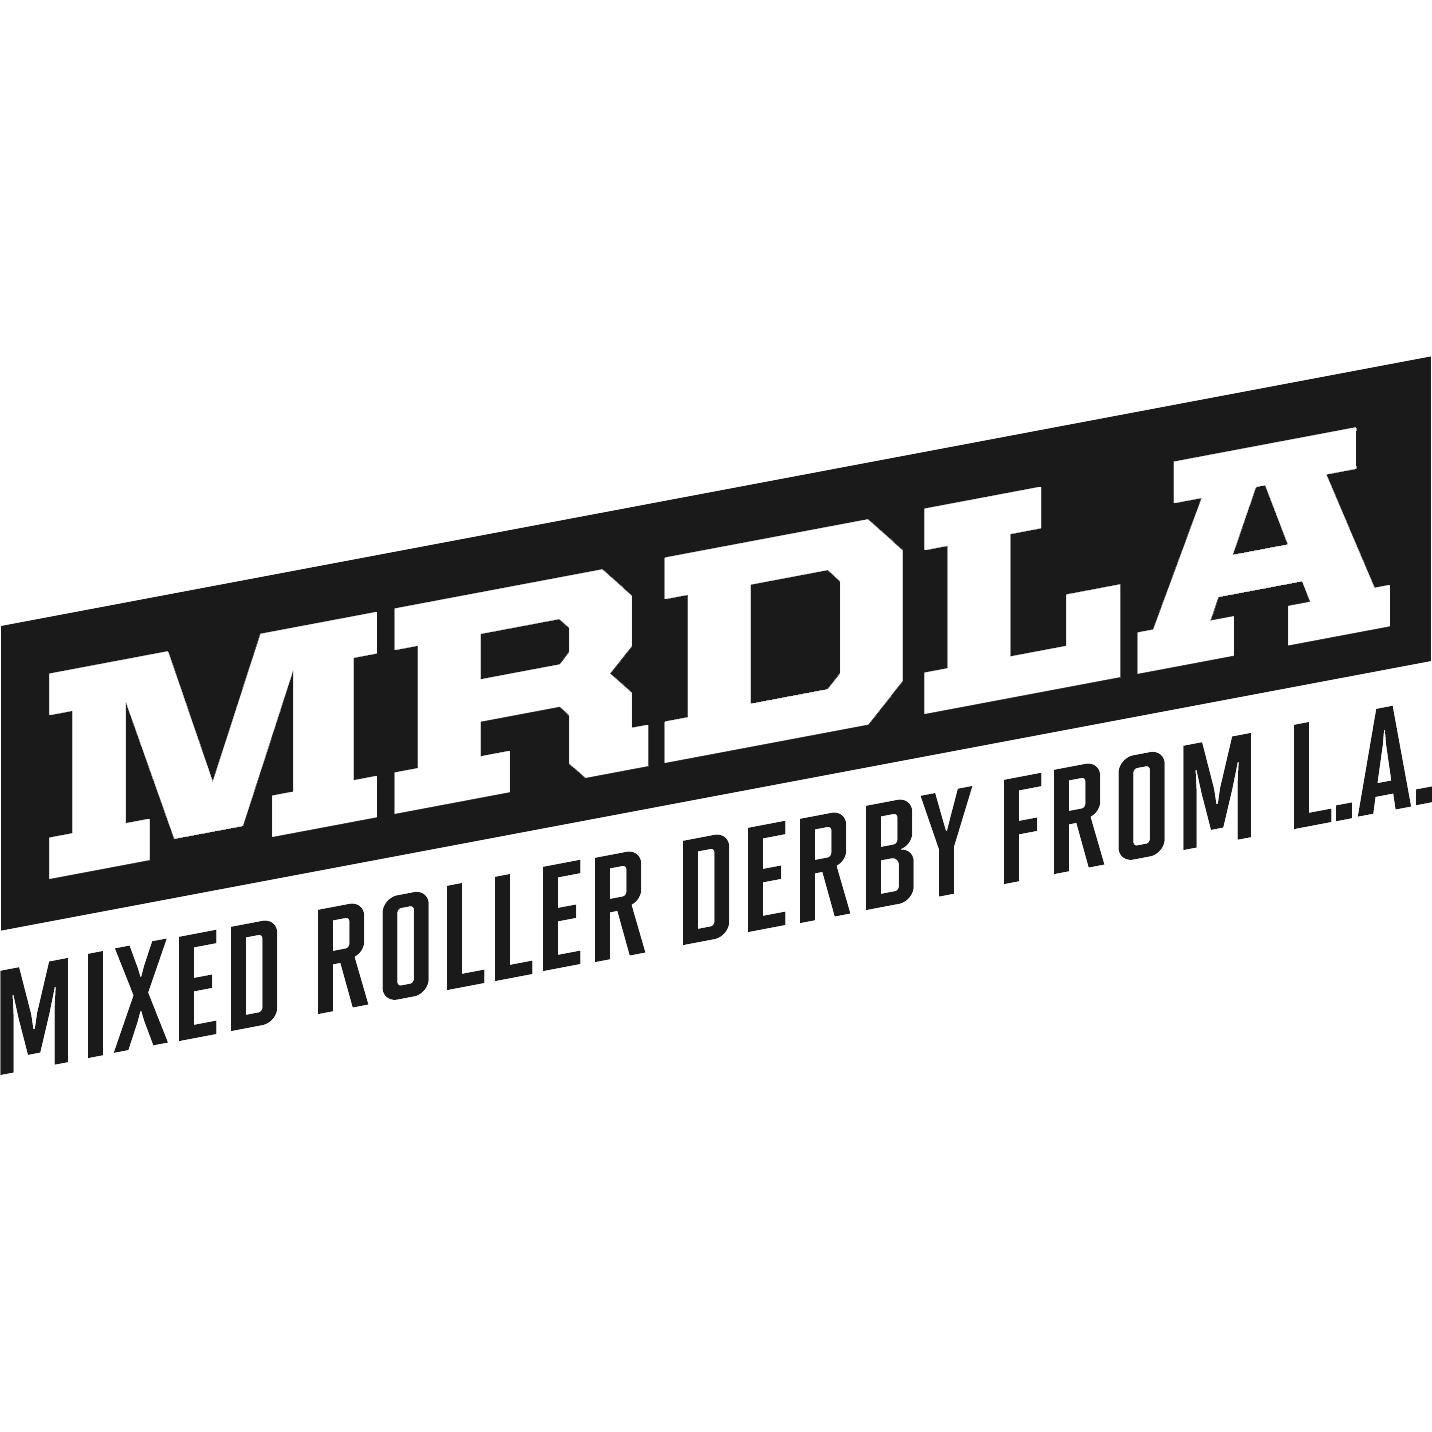 Mixed Roller Derby from Loire Atlantique (MRDLA)